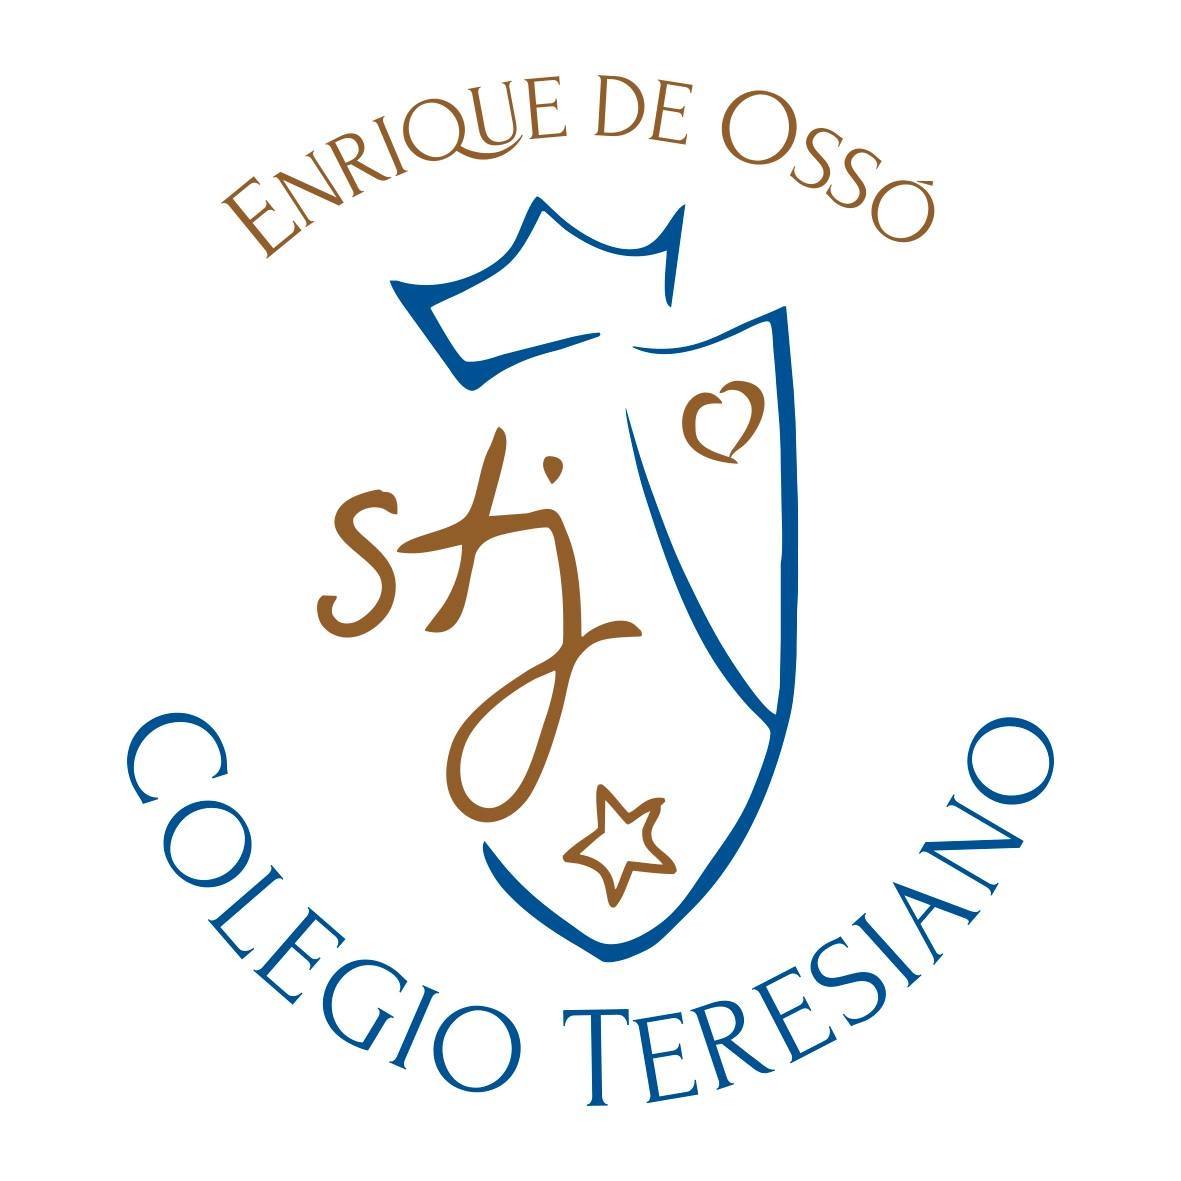 colegio teresiano enrique osso guadalajara logo